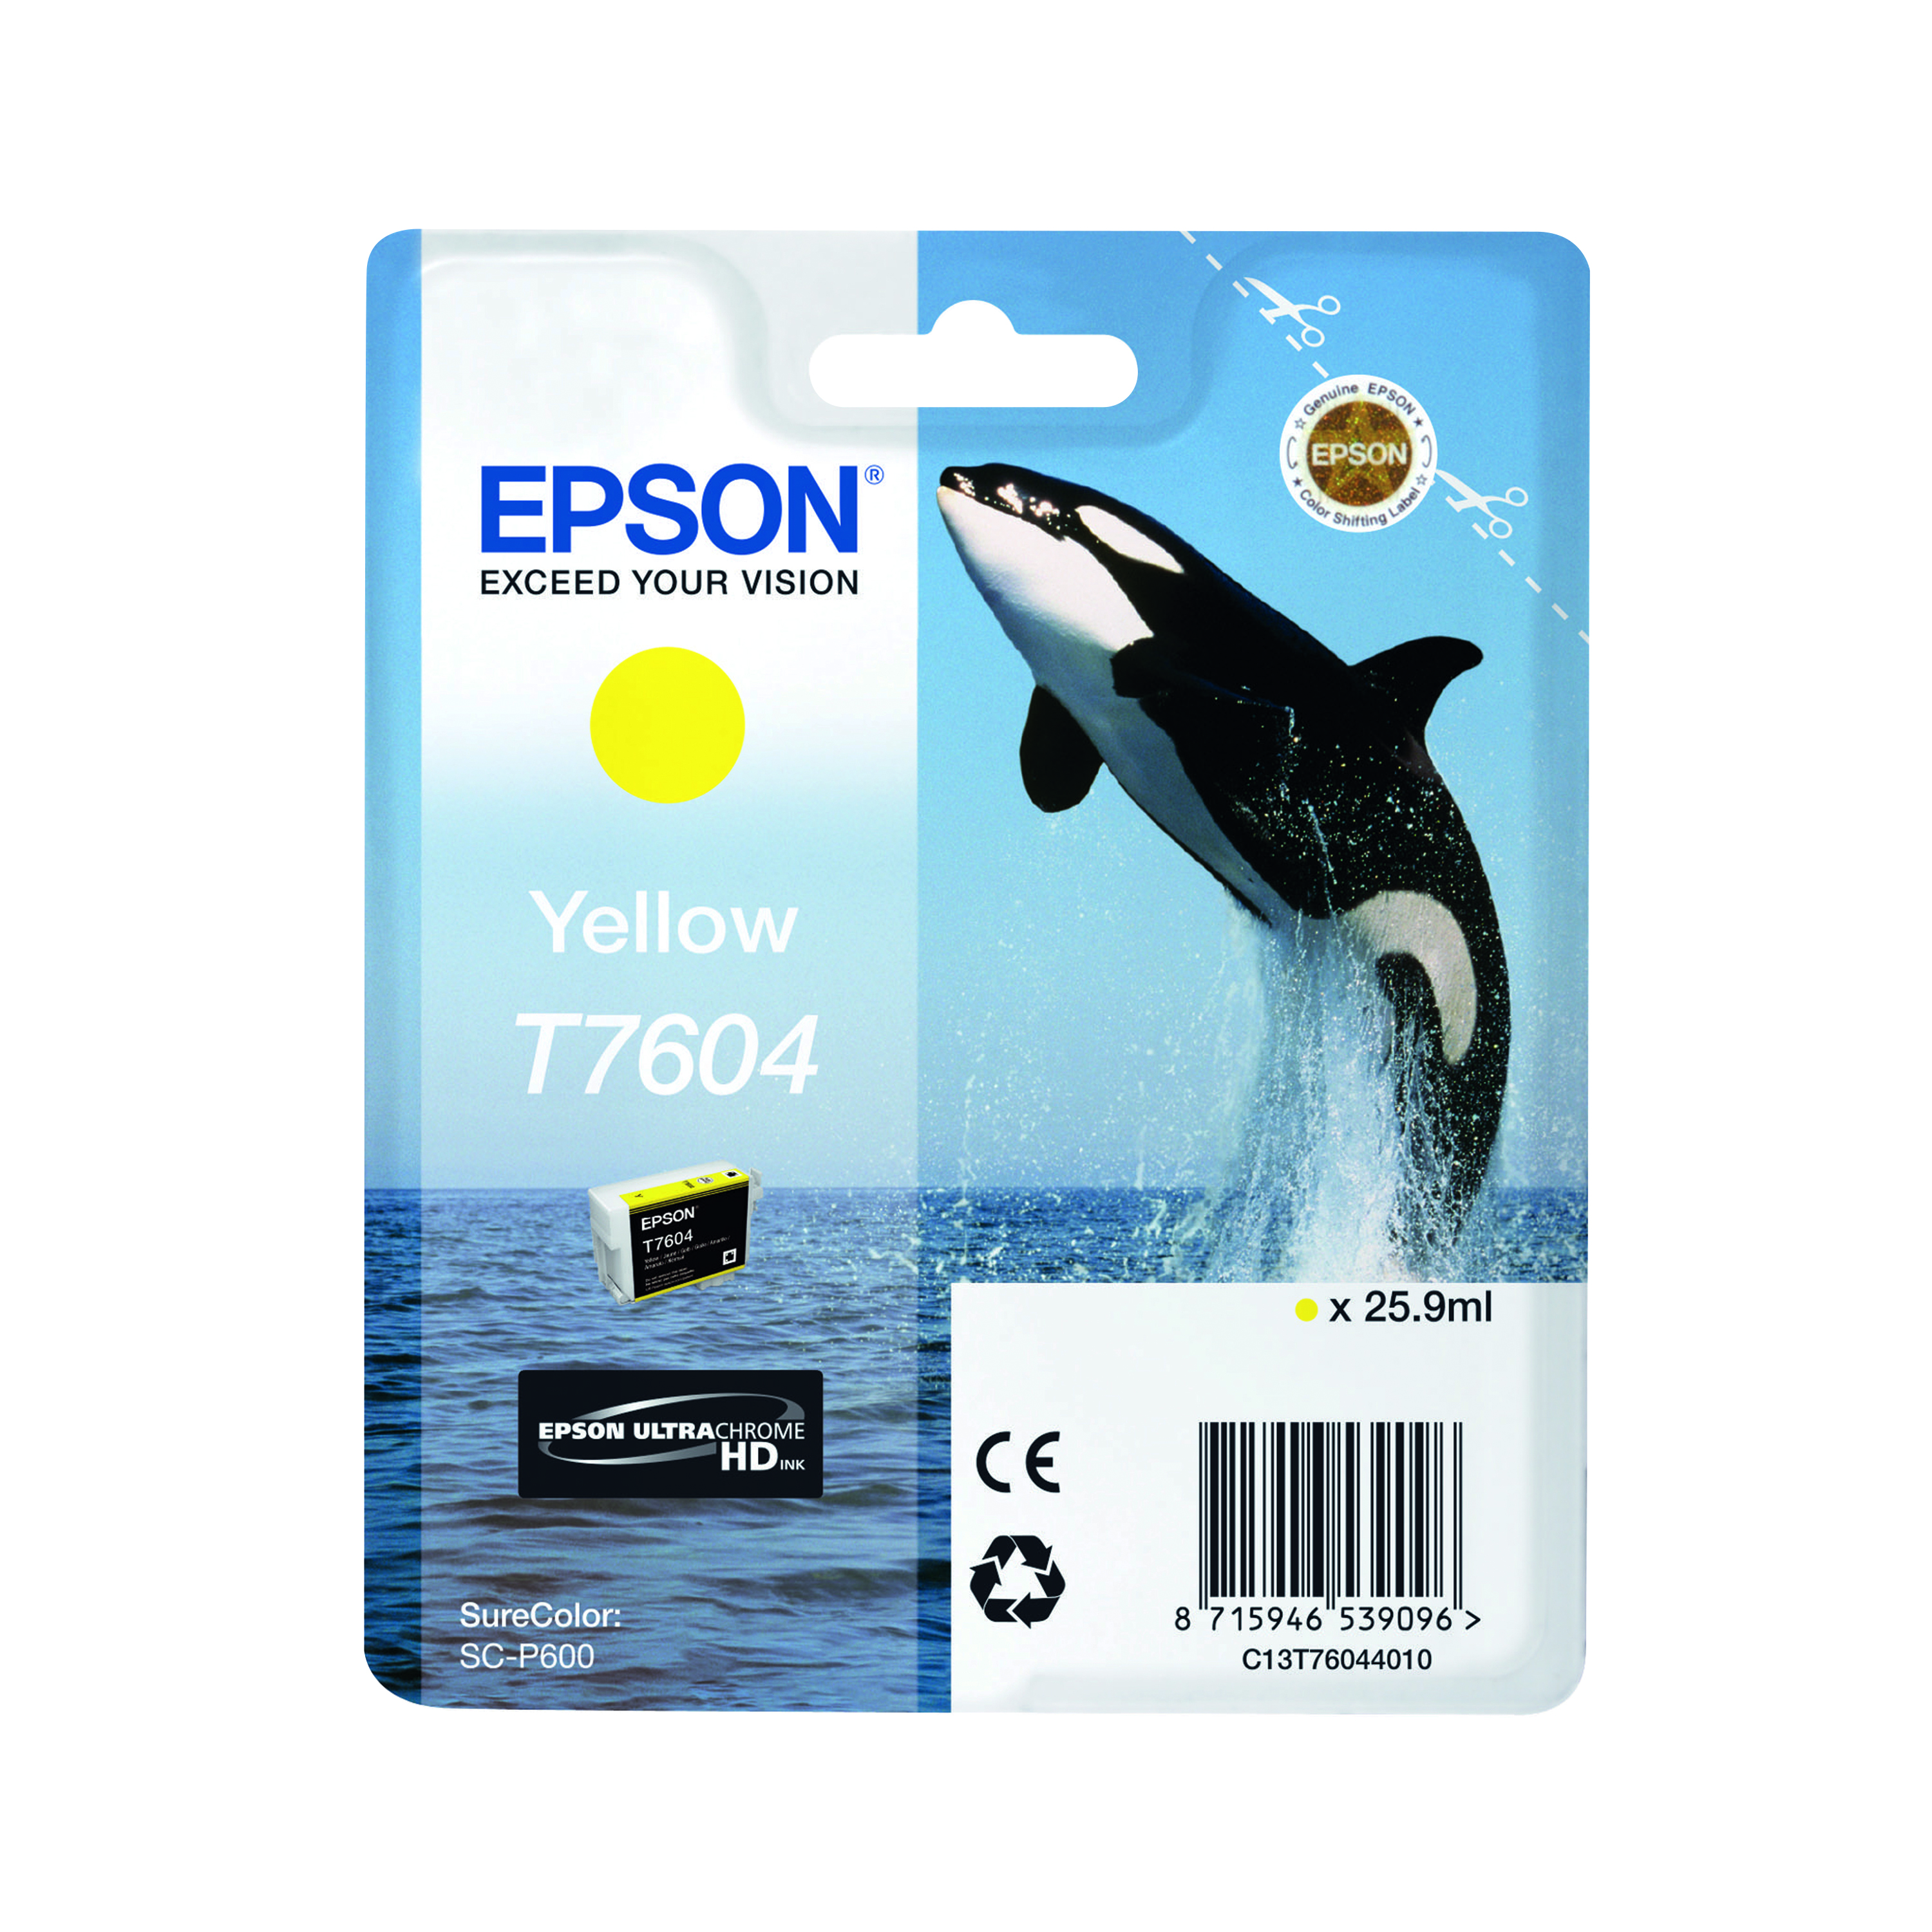 Epson T7604 Ink Cartridge Killer Whale Yellow C13T76044010